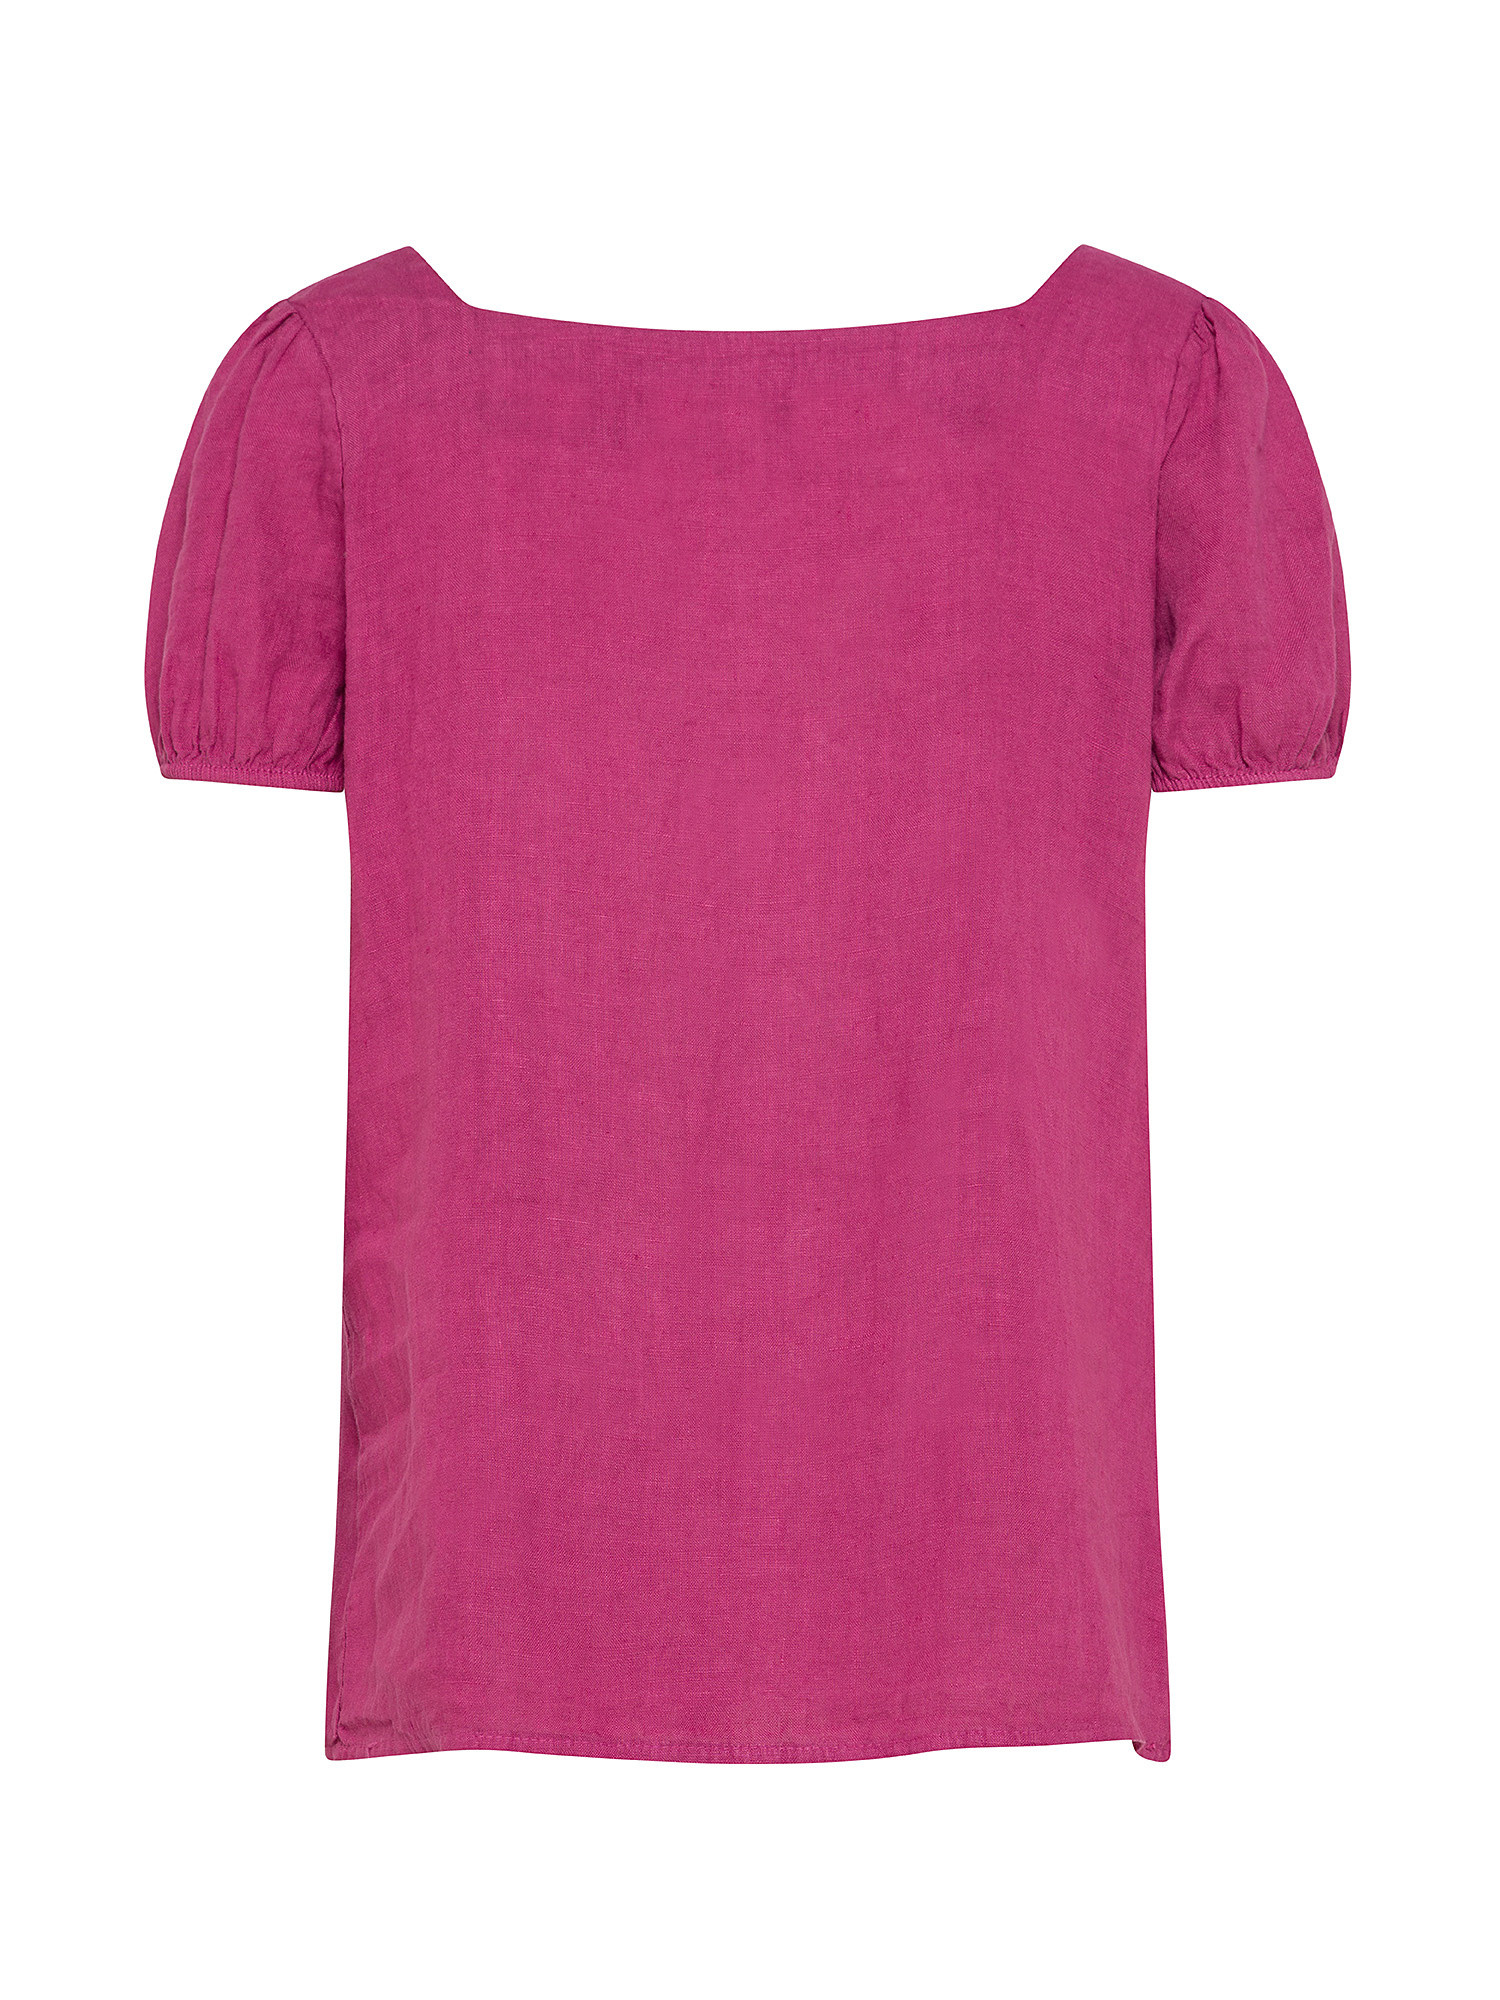 Koan - Linen blouse, Pink, large image number 1